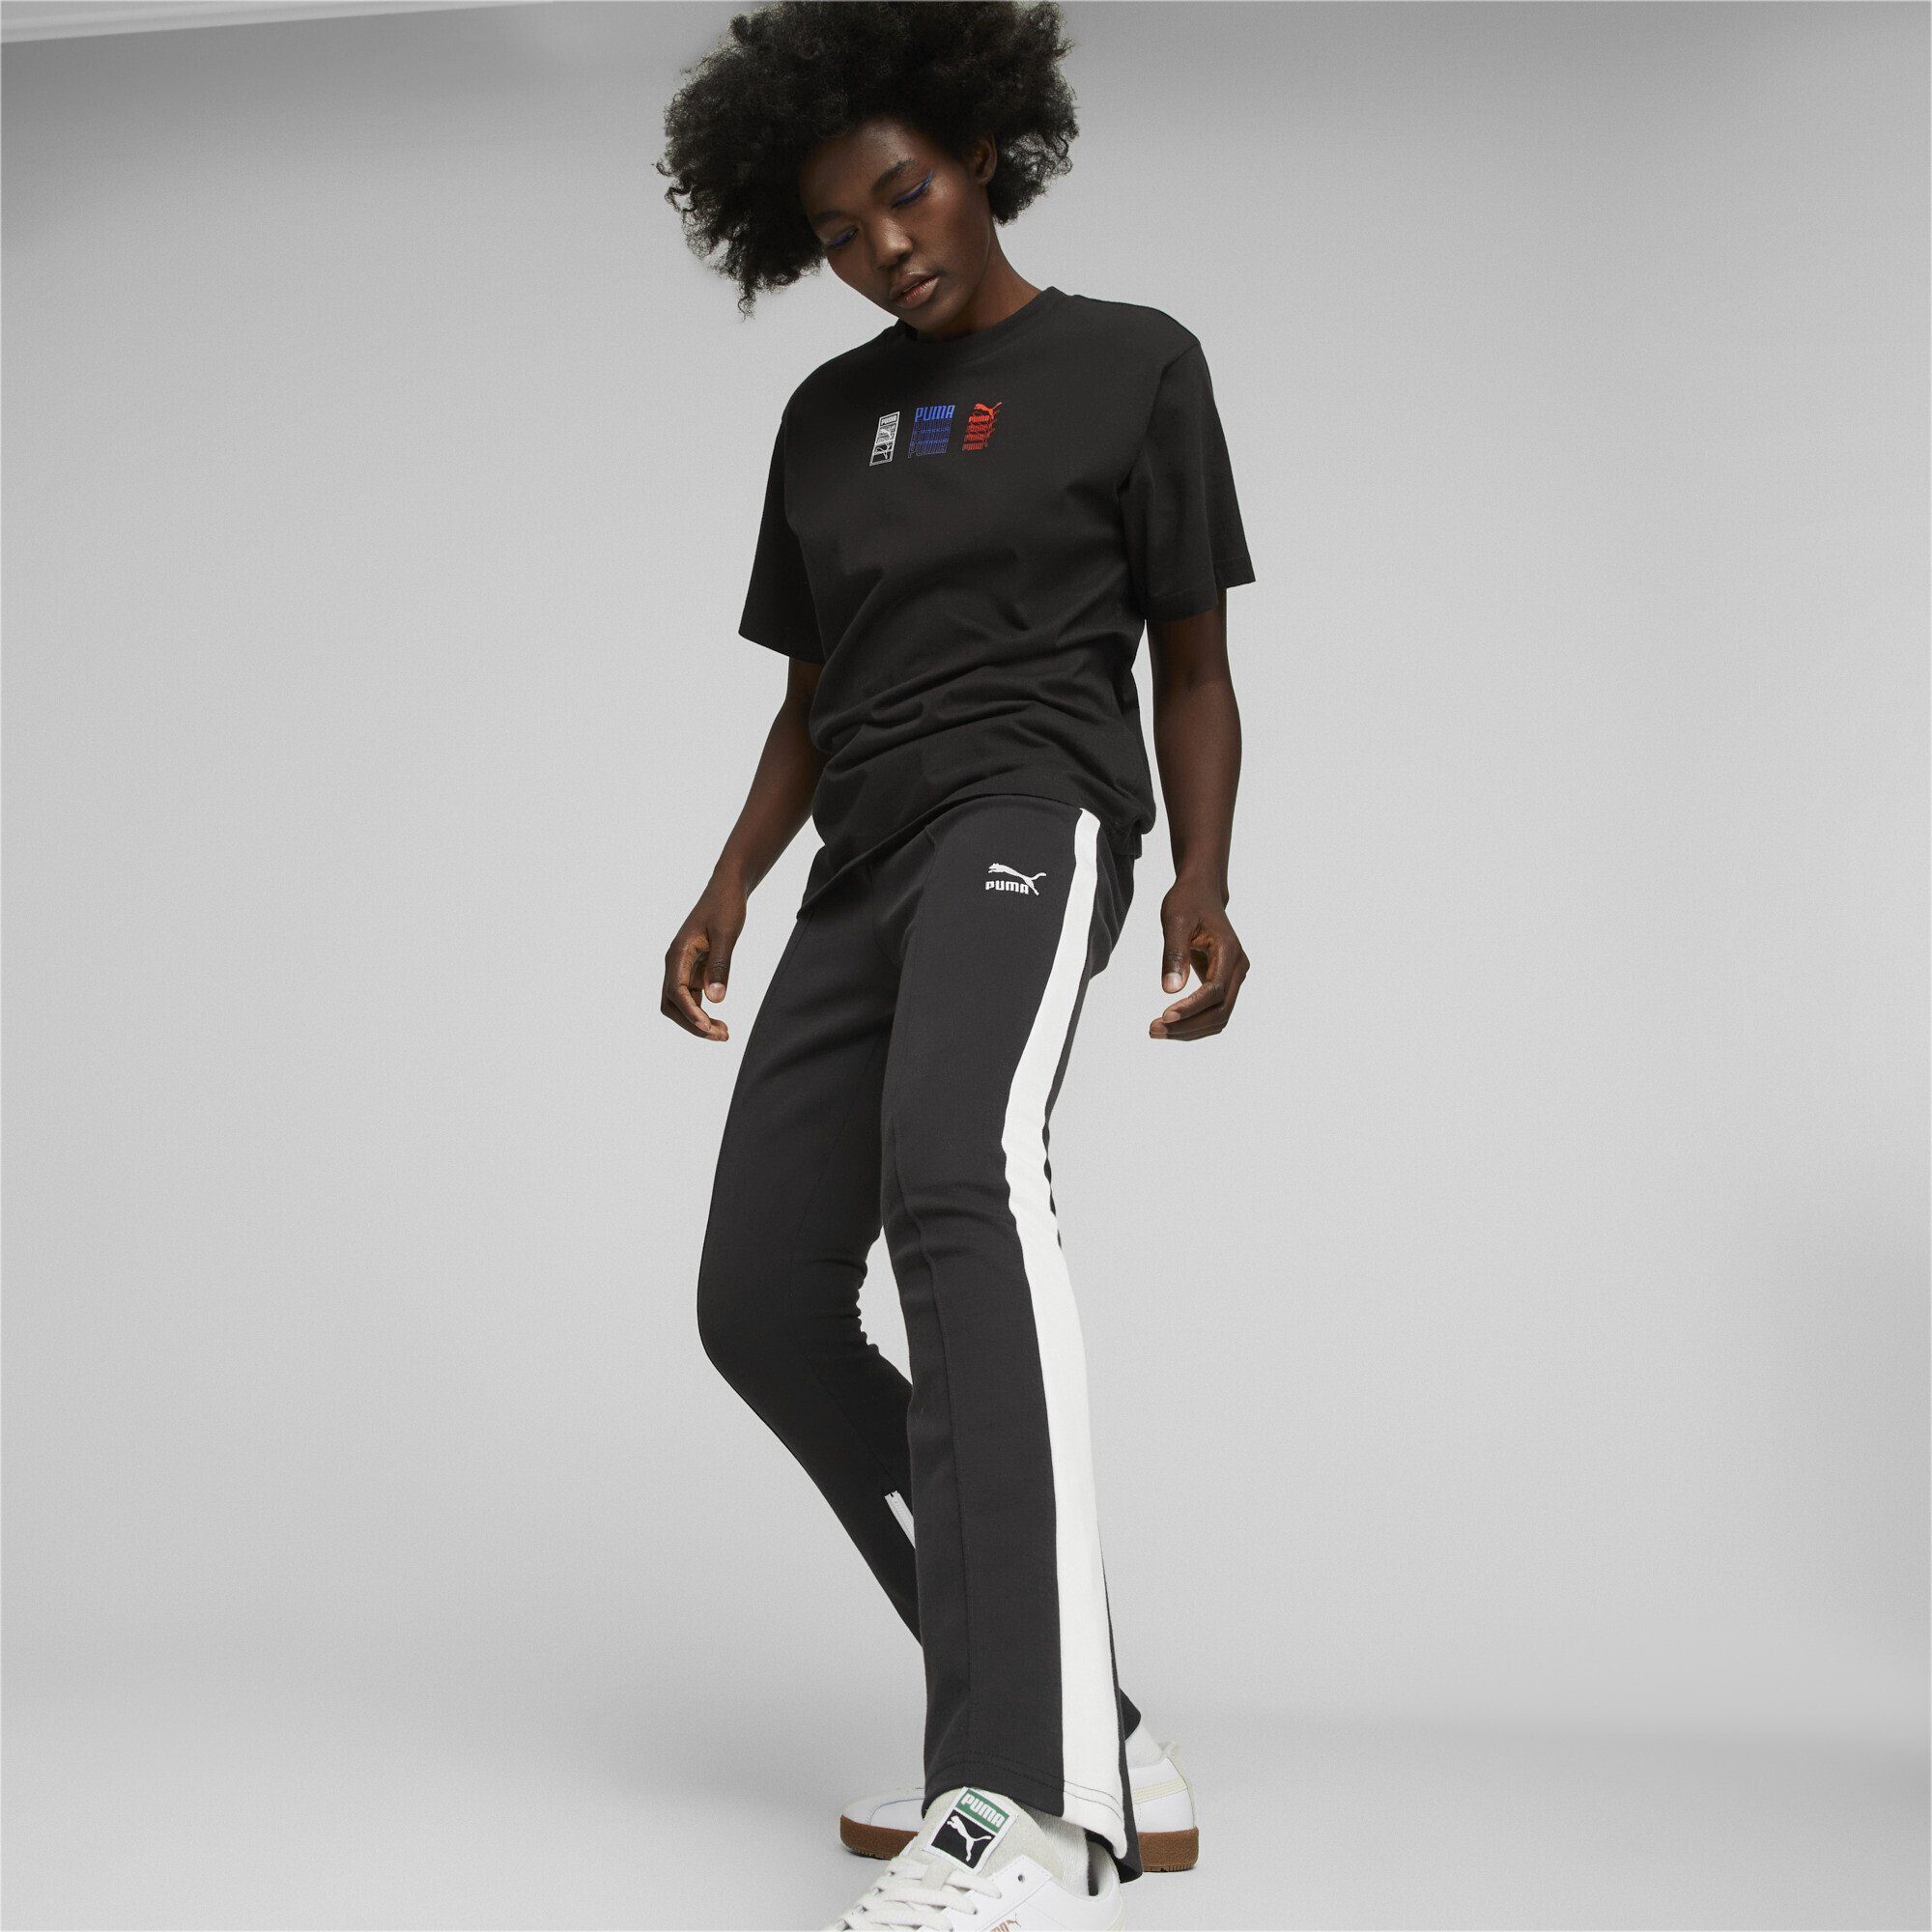 PUMA Sporthose T7 Black Damen Leggings